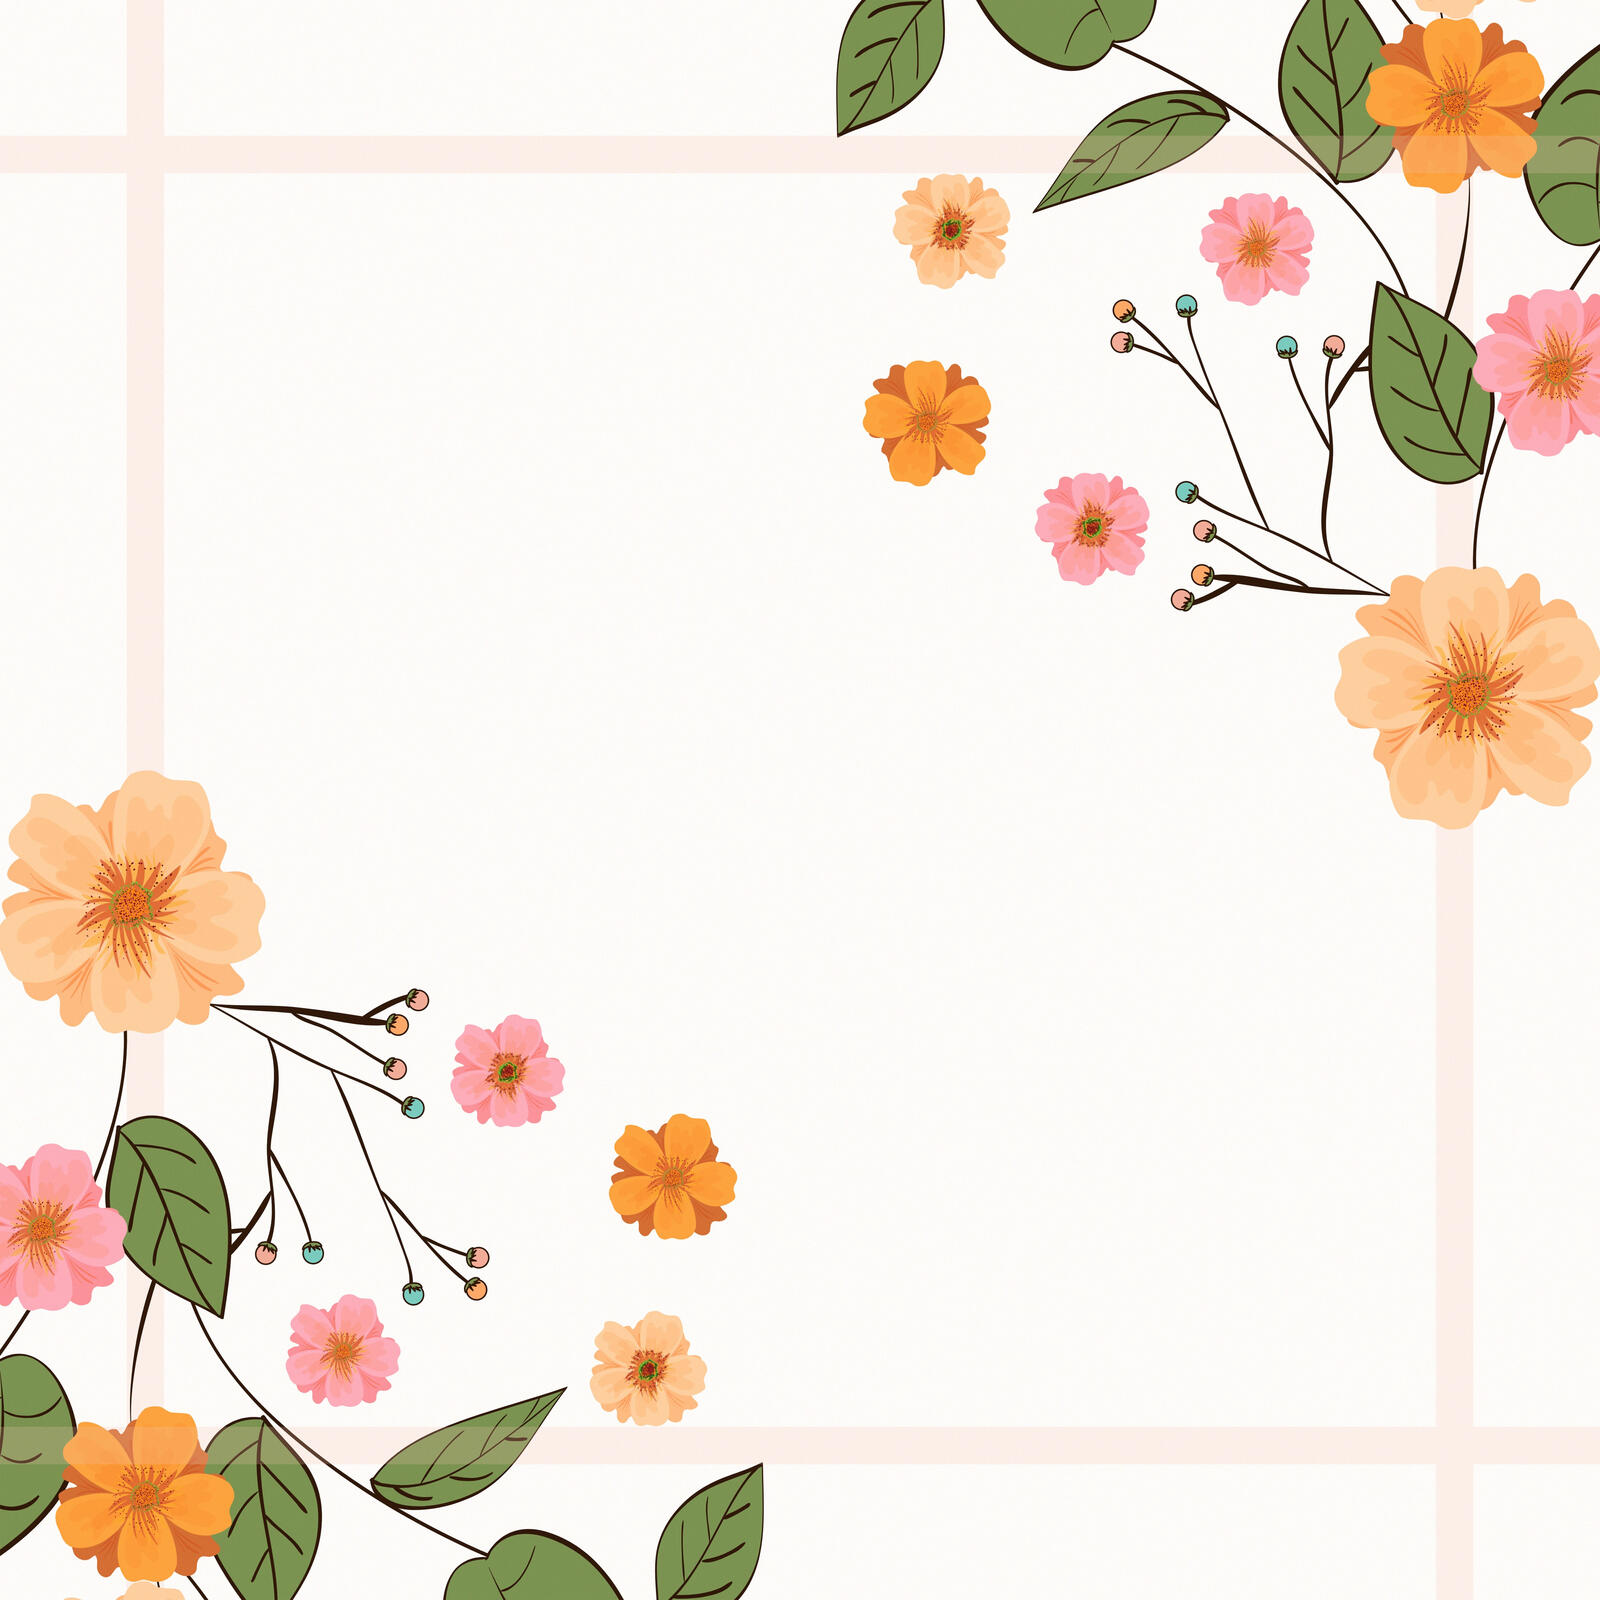 Wallpapers flower leaf template greeting card on the desktop